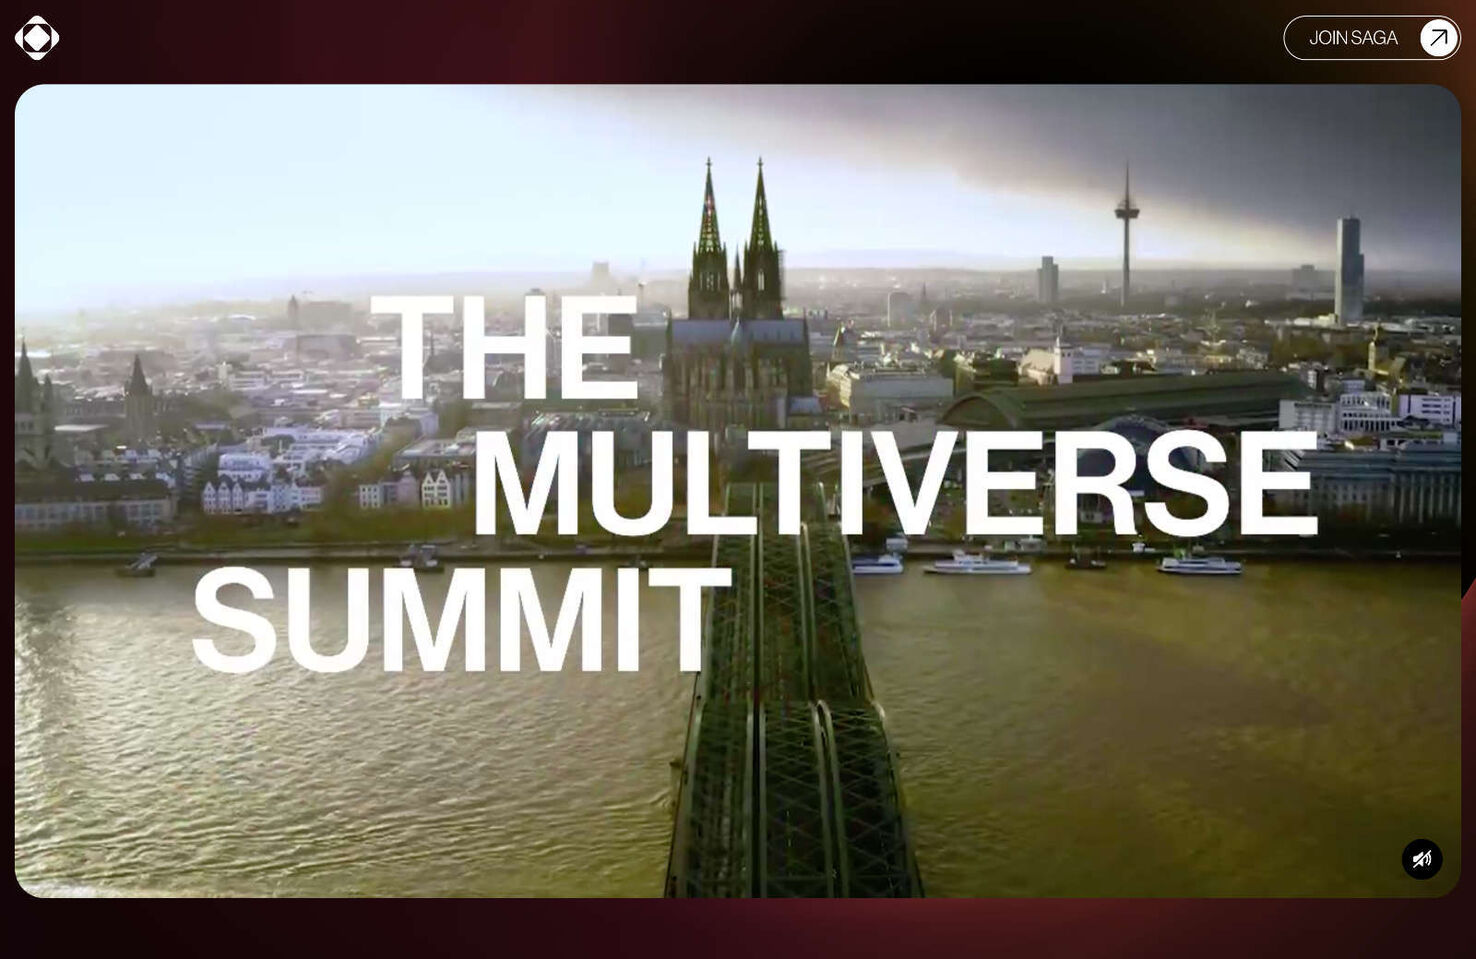 Multiverse Summit